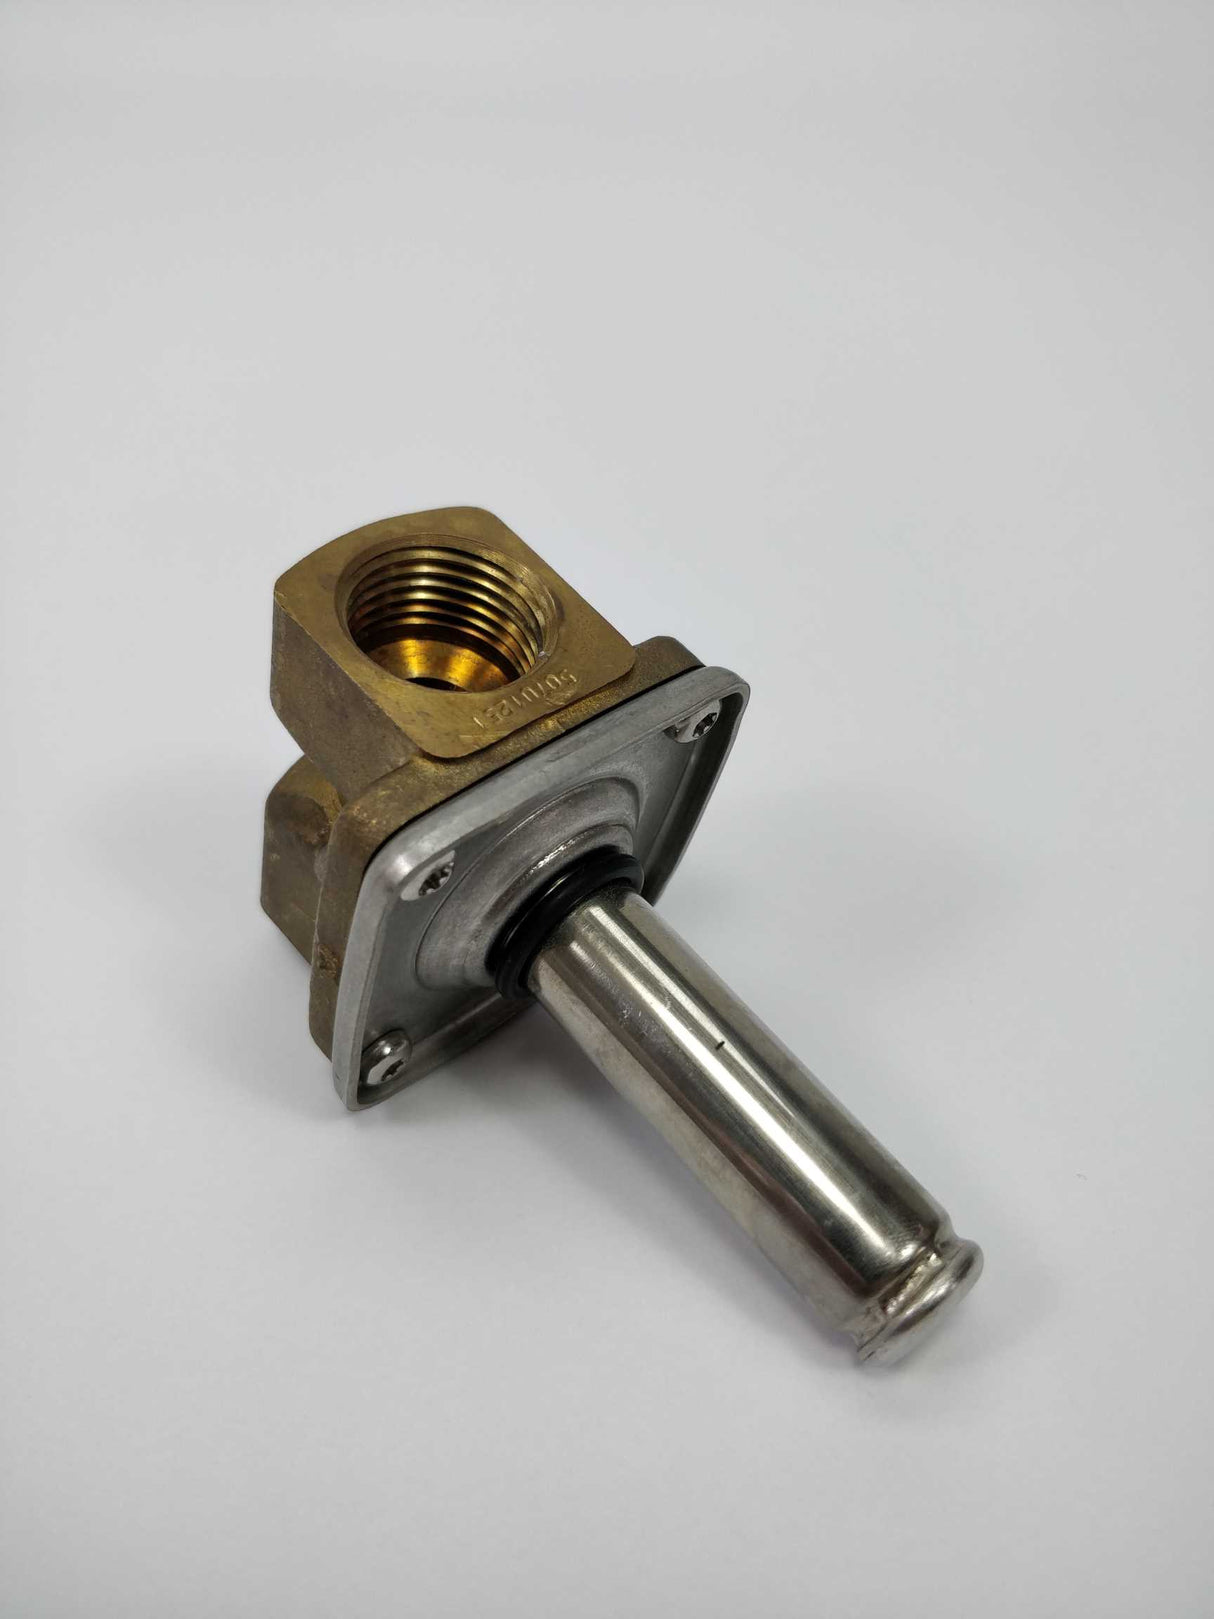 Danfoss 507U12E1 Solenoid valve